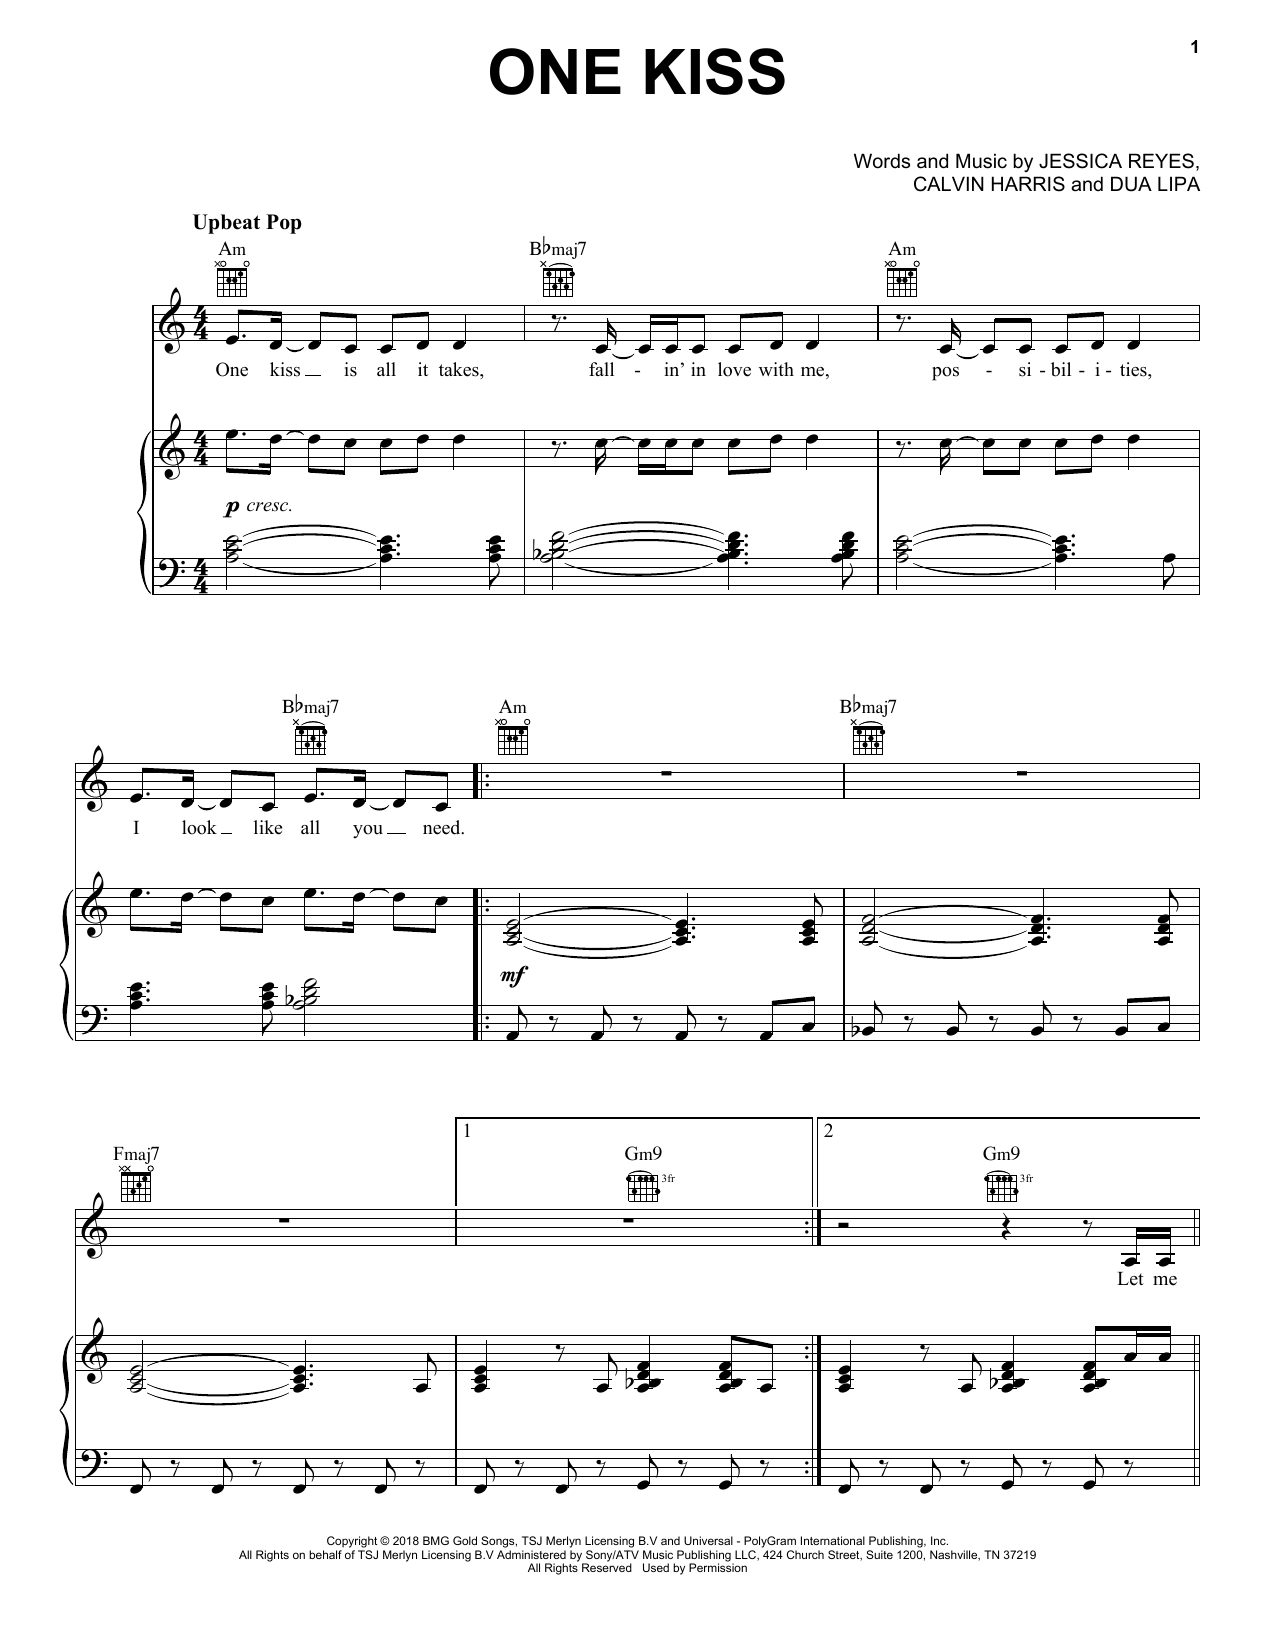 Calvin Harris & Dua Lipa One Kiss Sheet Music Notes & Chords for Easy Piano - Download or Print PDF